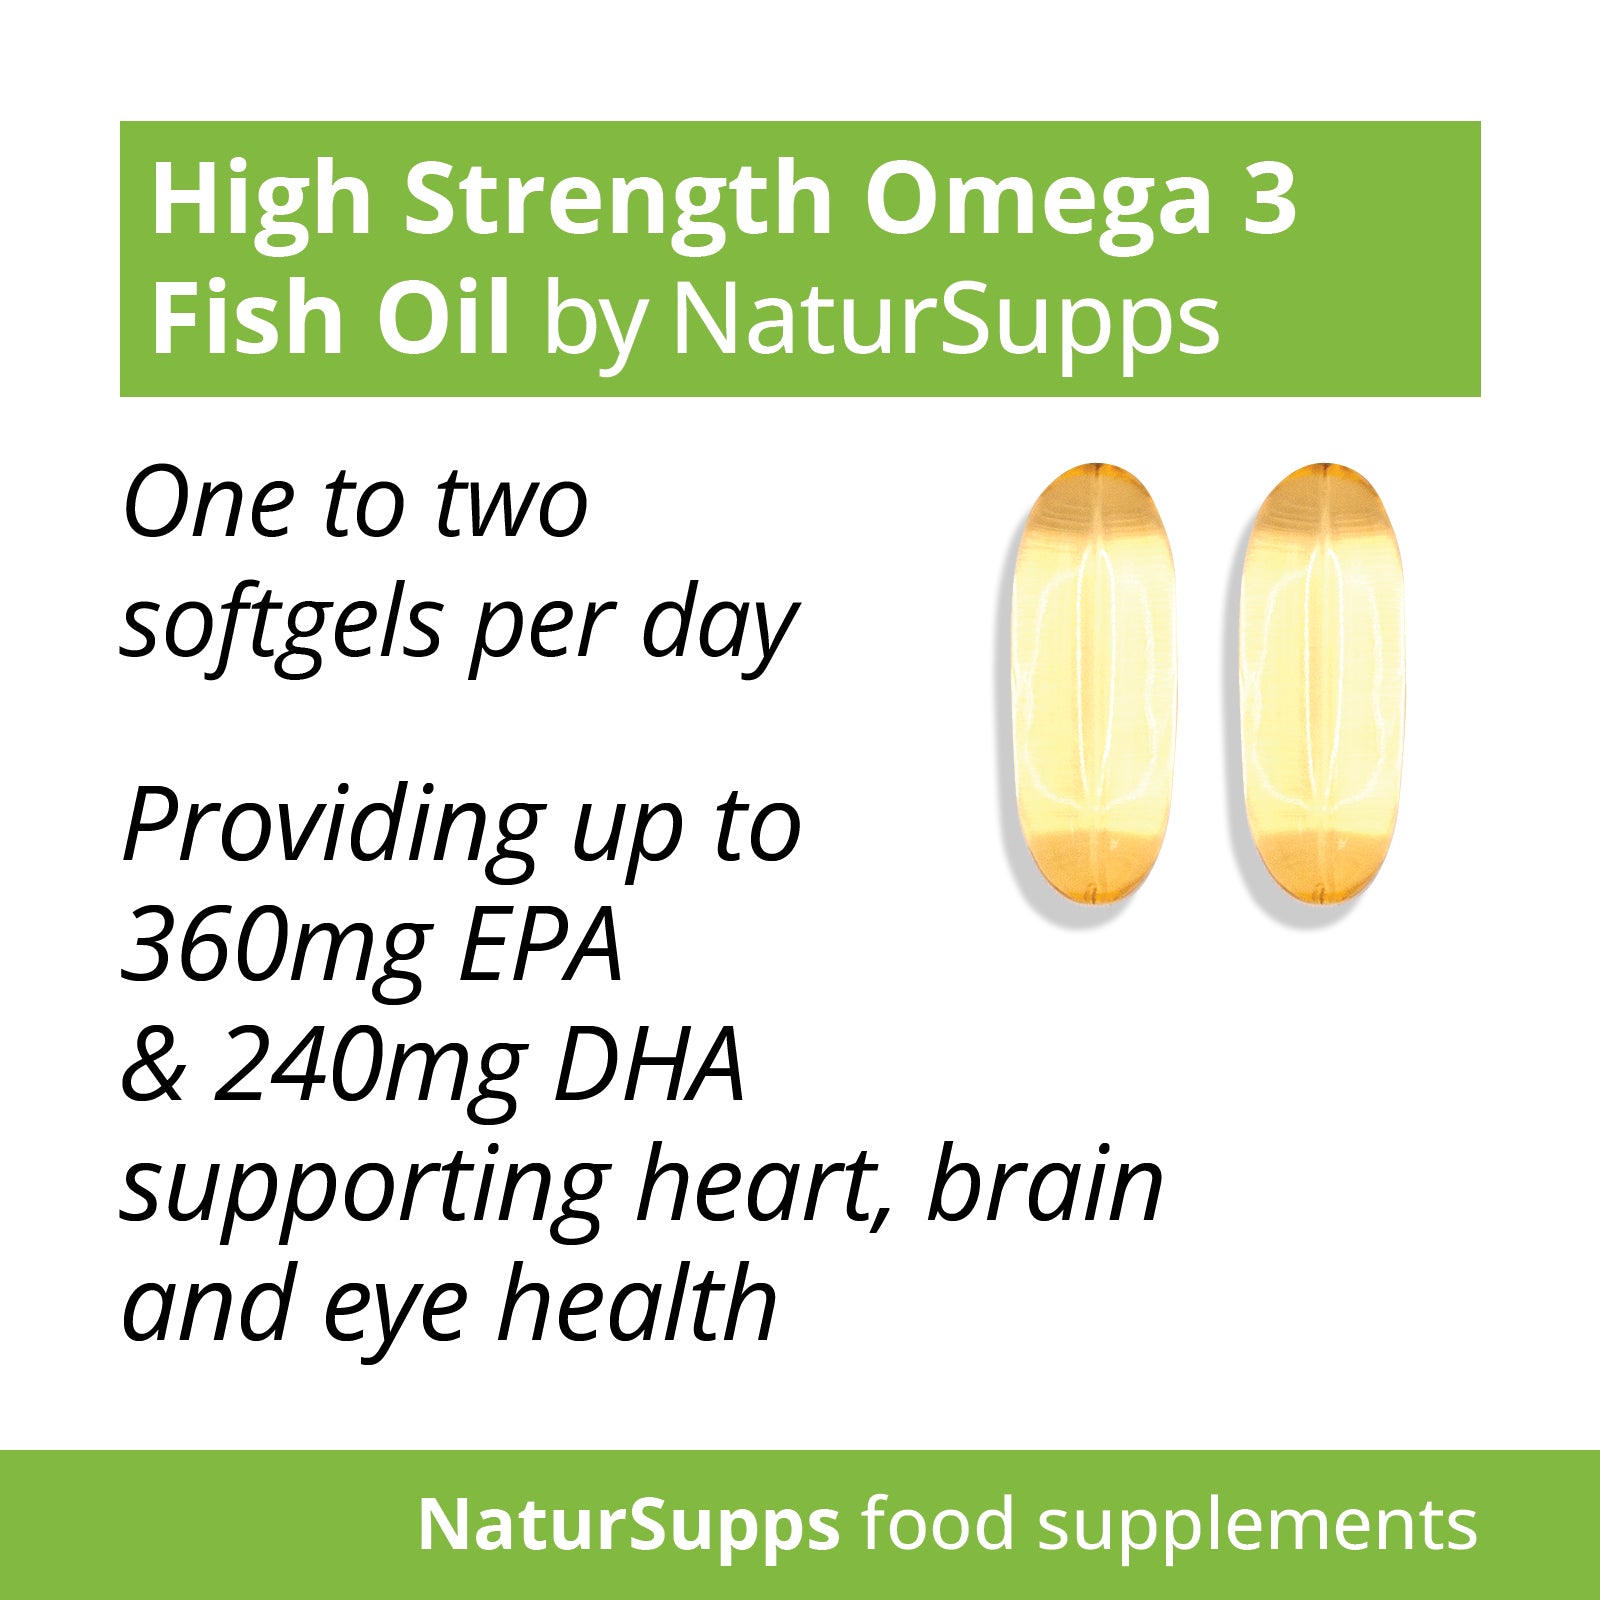 Omega 3 Fish Oil 1000mg Capsules High Strength Omega 3 Fatty Acids DHA and EPA